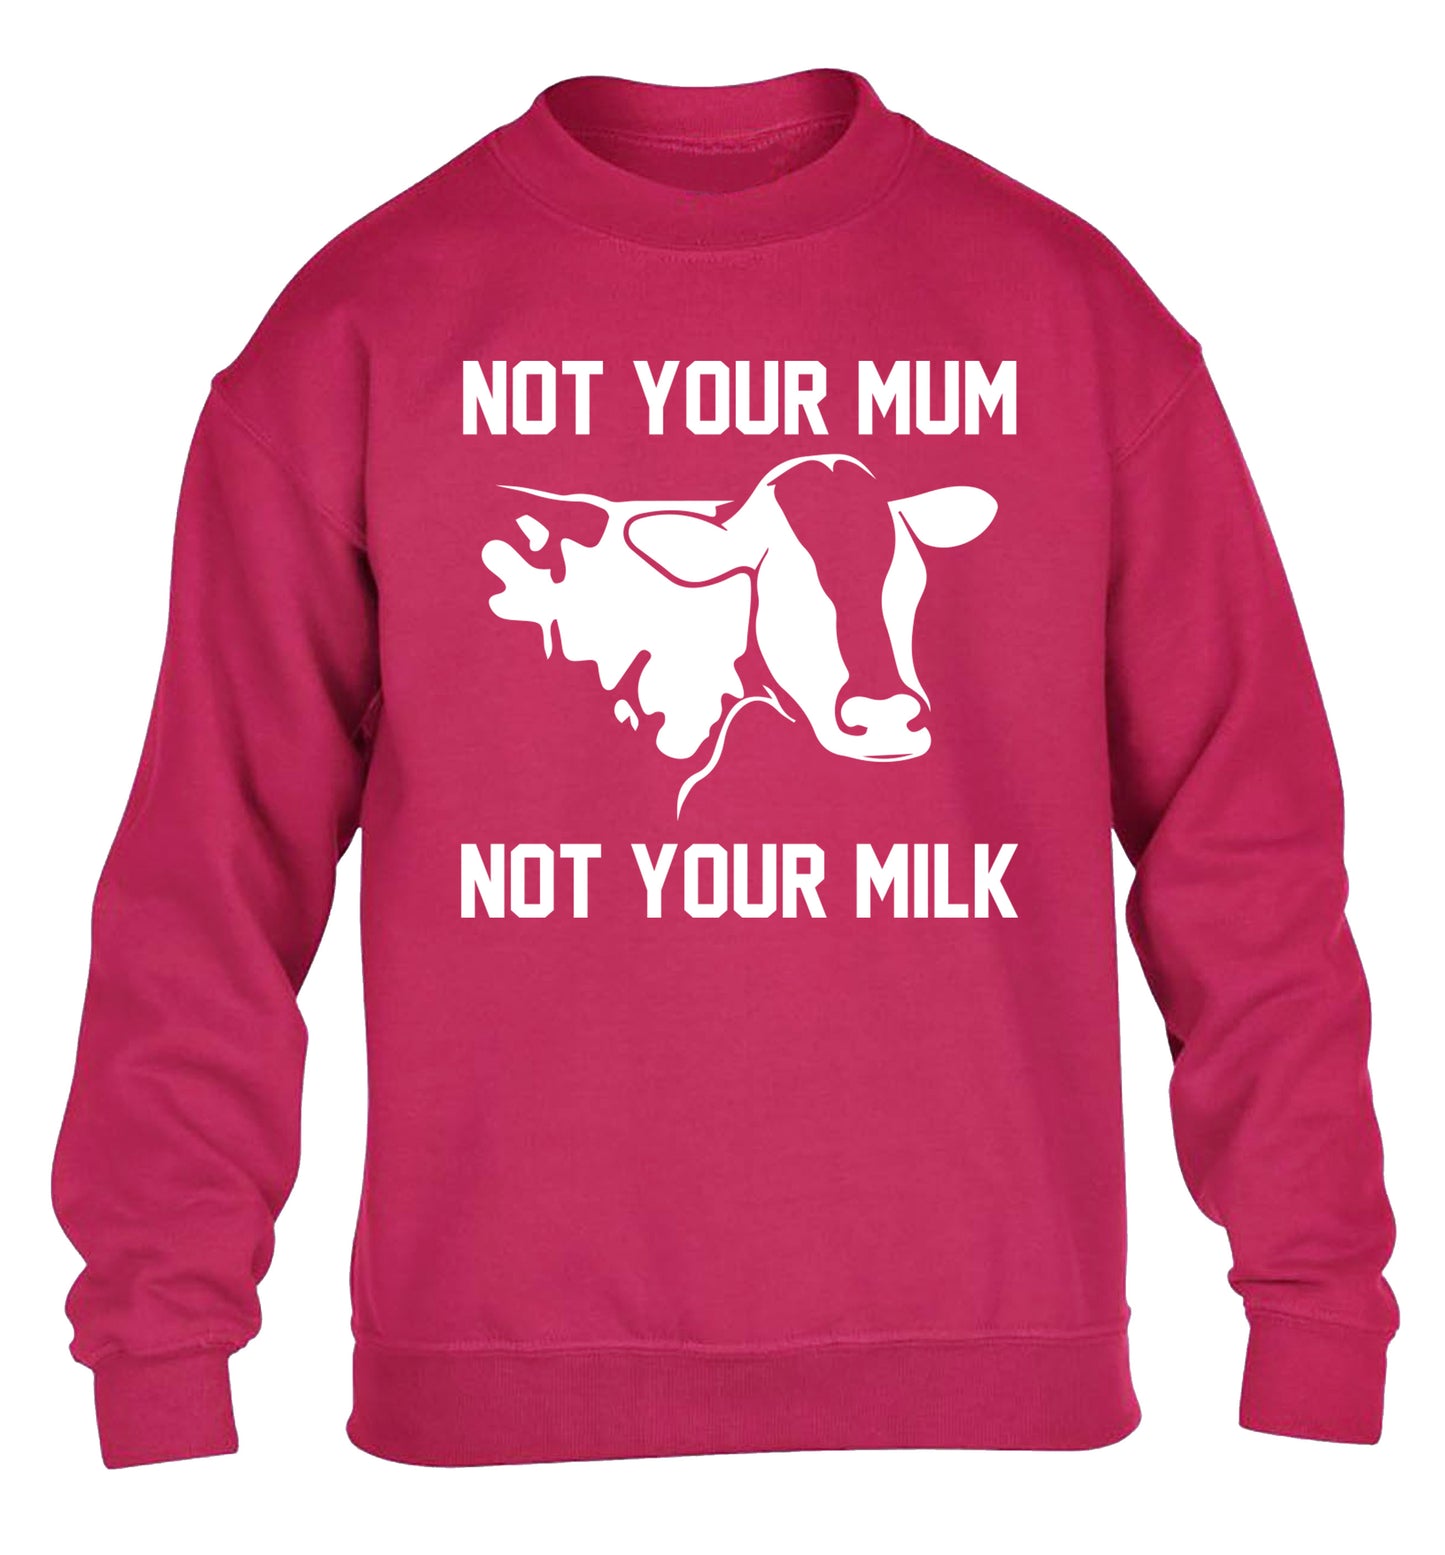 Not your mum not your milk children's pink sweater 12-14 Years